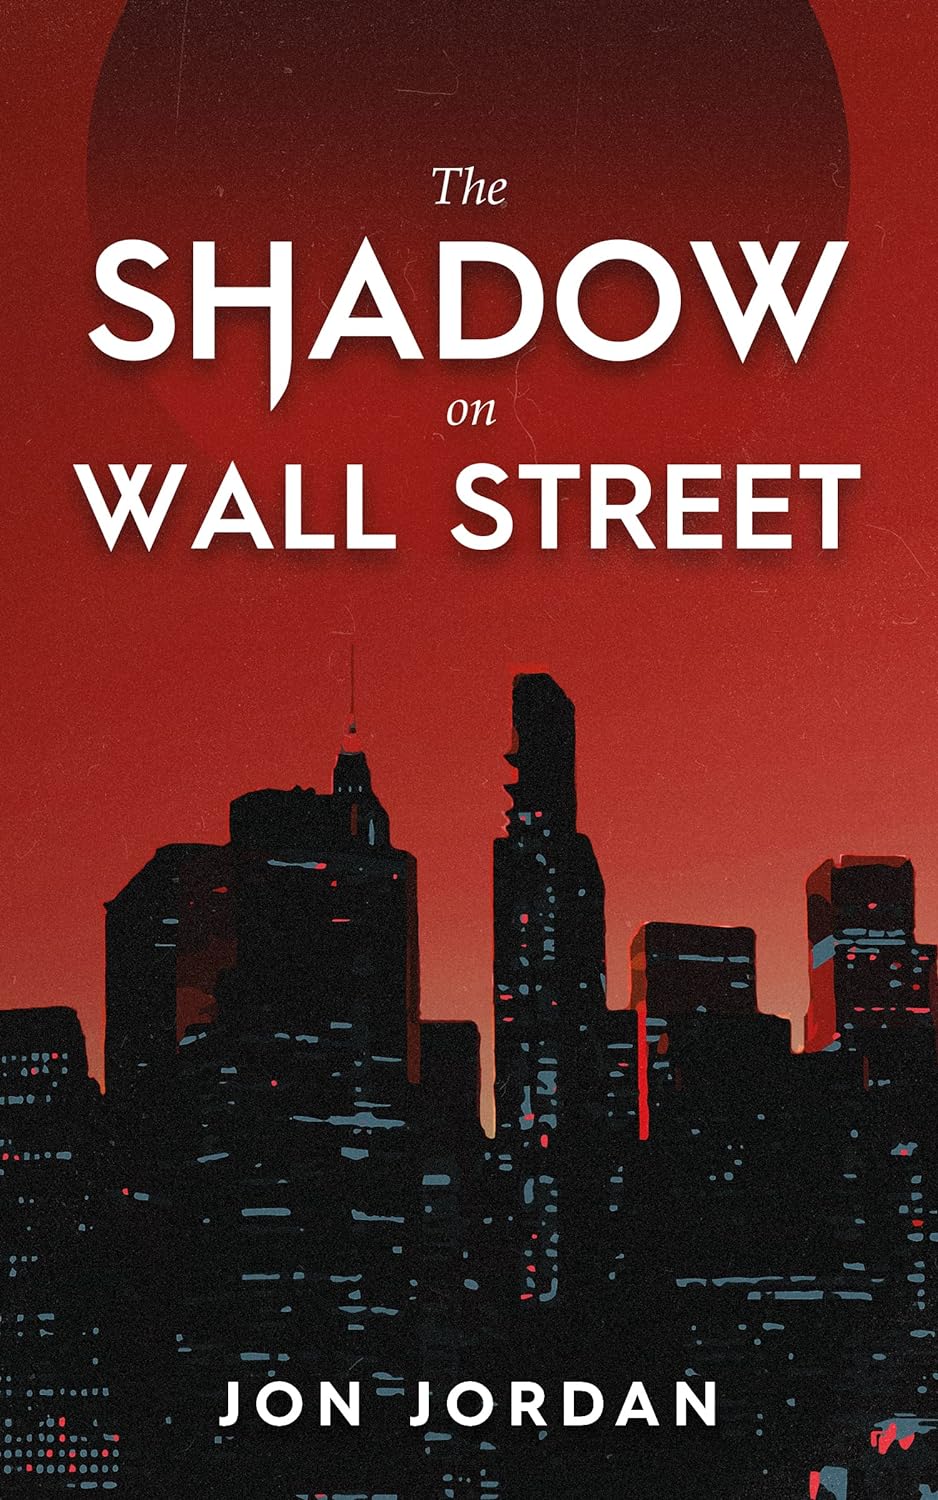 The Shadow on Wall Street by Bestselling Author Jon Jordan